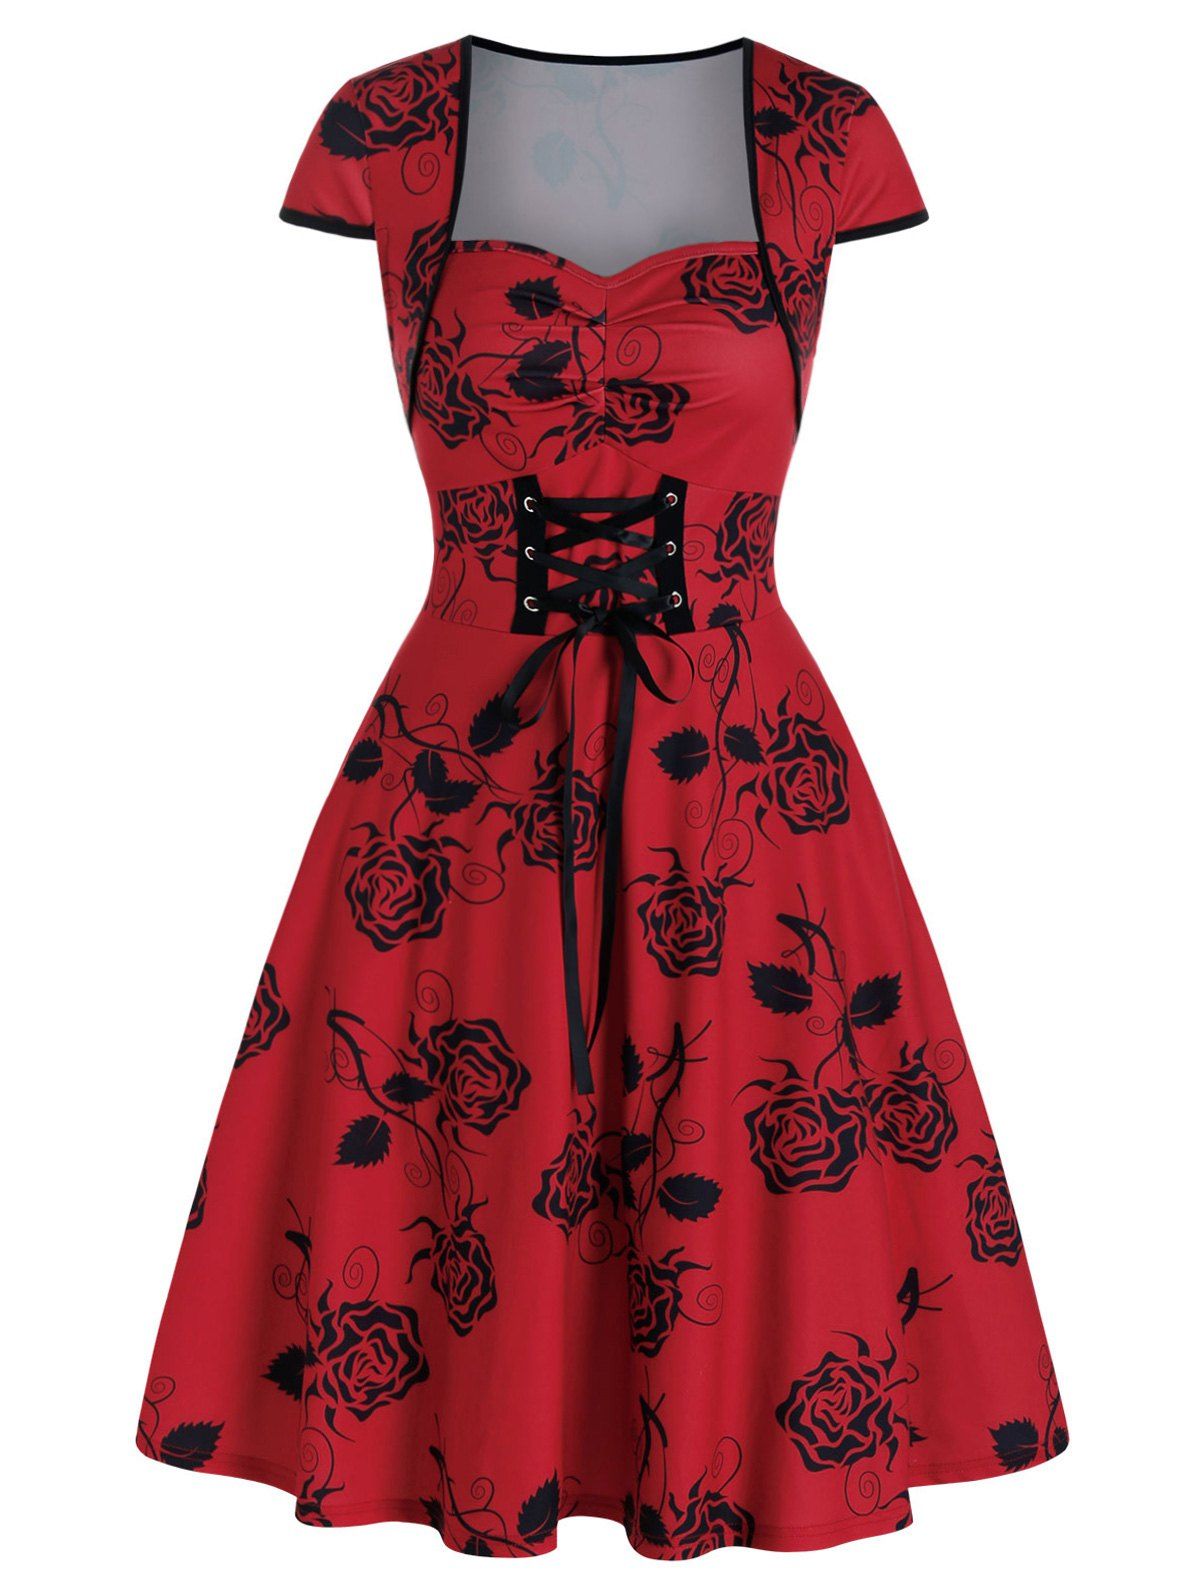 Floral Print Lace Up Cap Sleeve A Line Dress - LAVA RED L